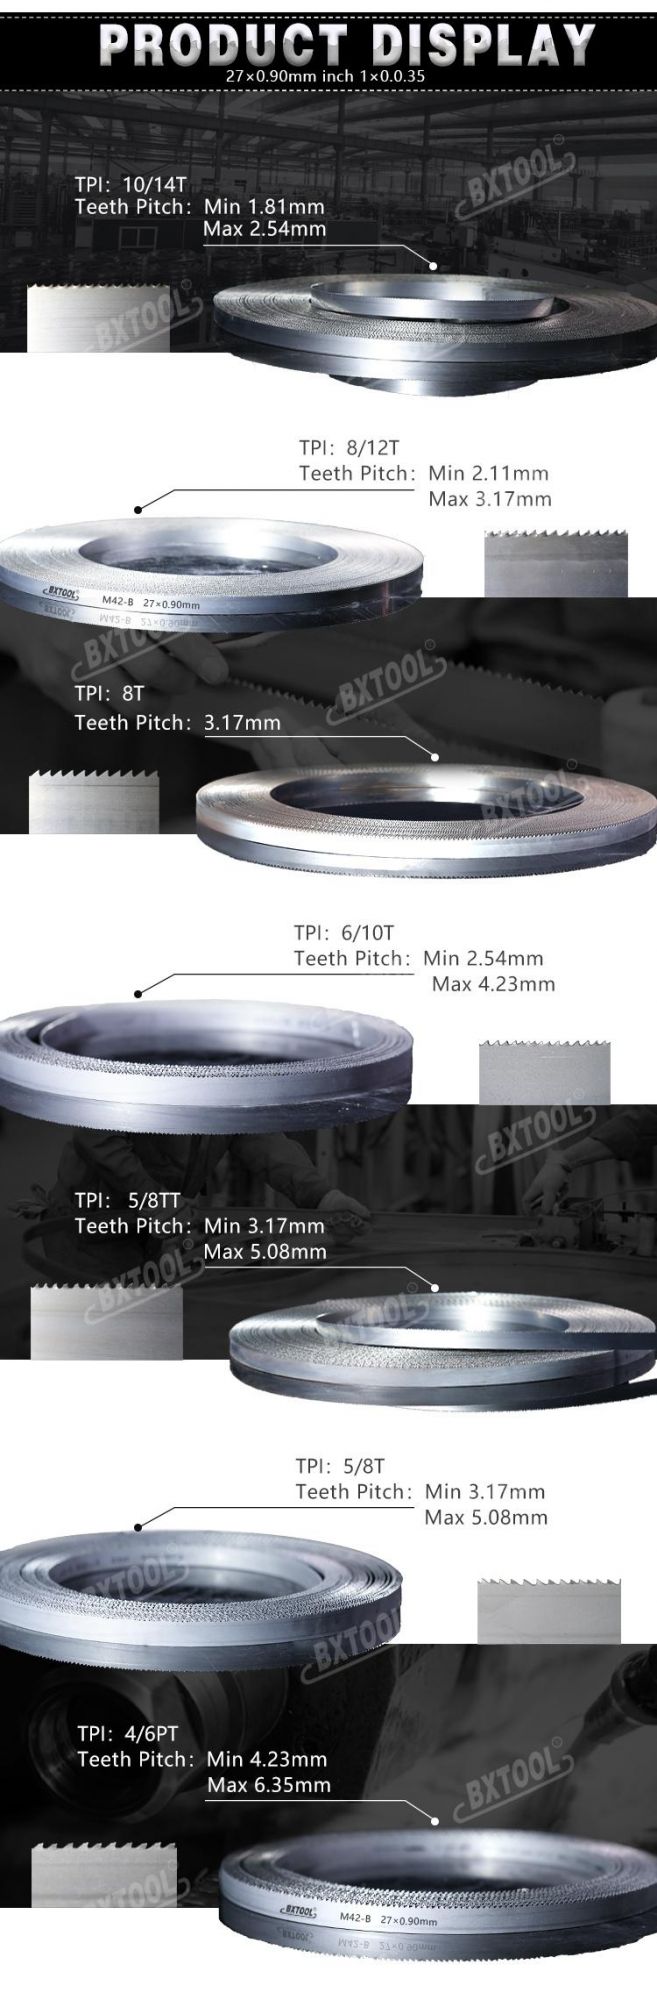 Share Brand 27*0.9mm M42 HSS Bimetal Bandsaw Blades for Cutting Die Steel Stainless Steel